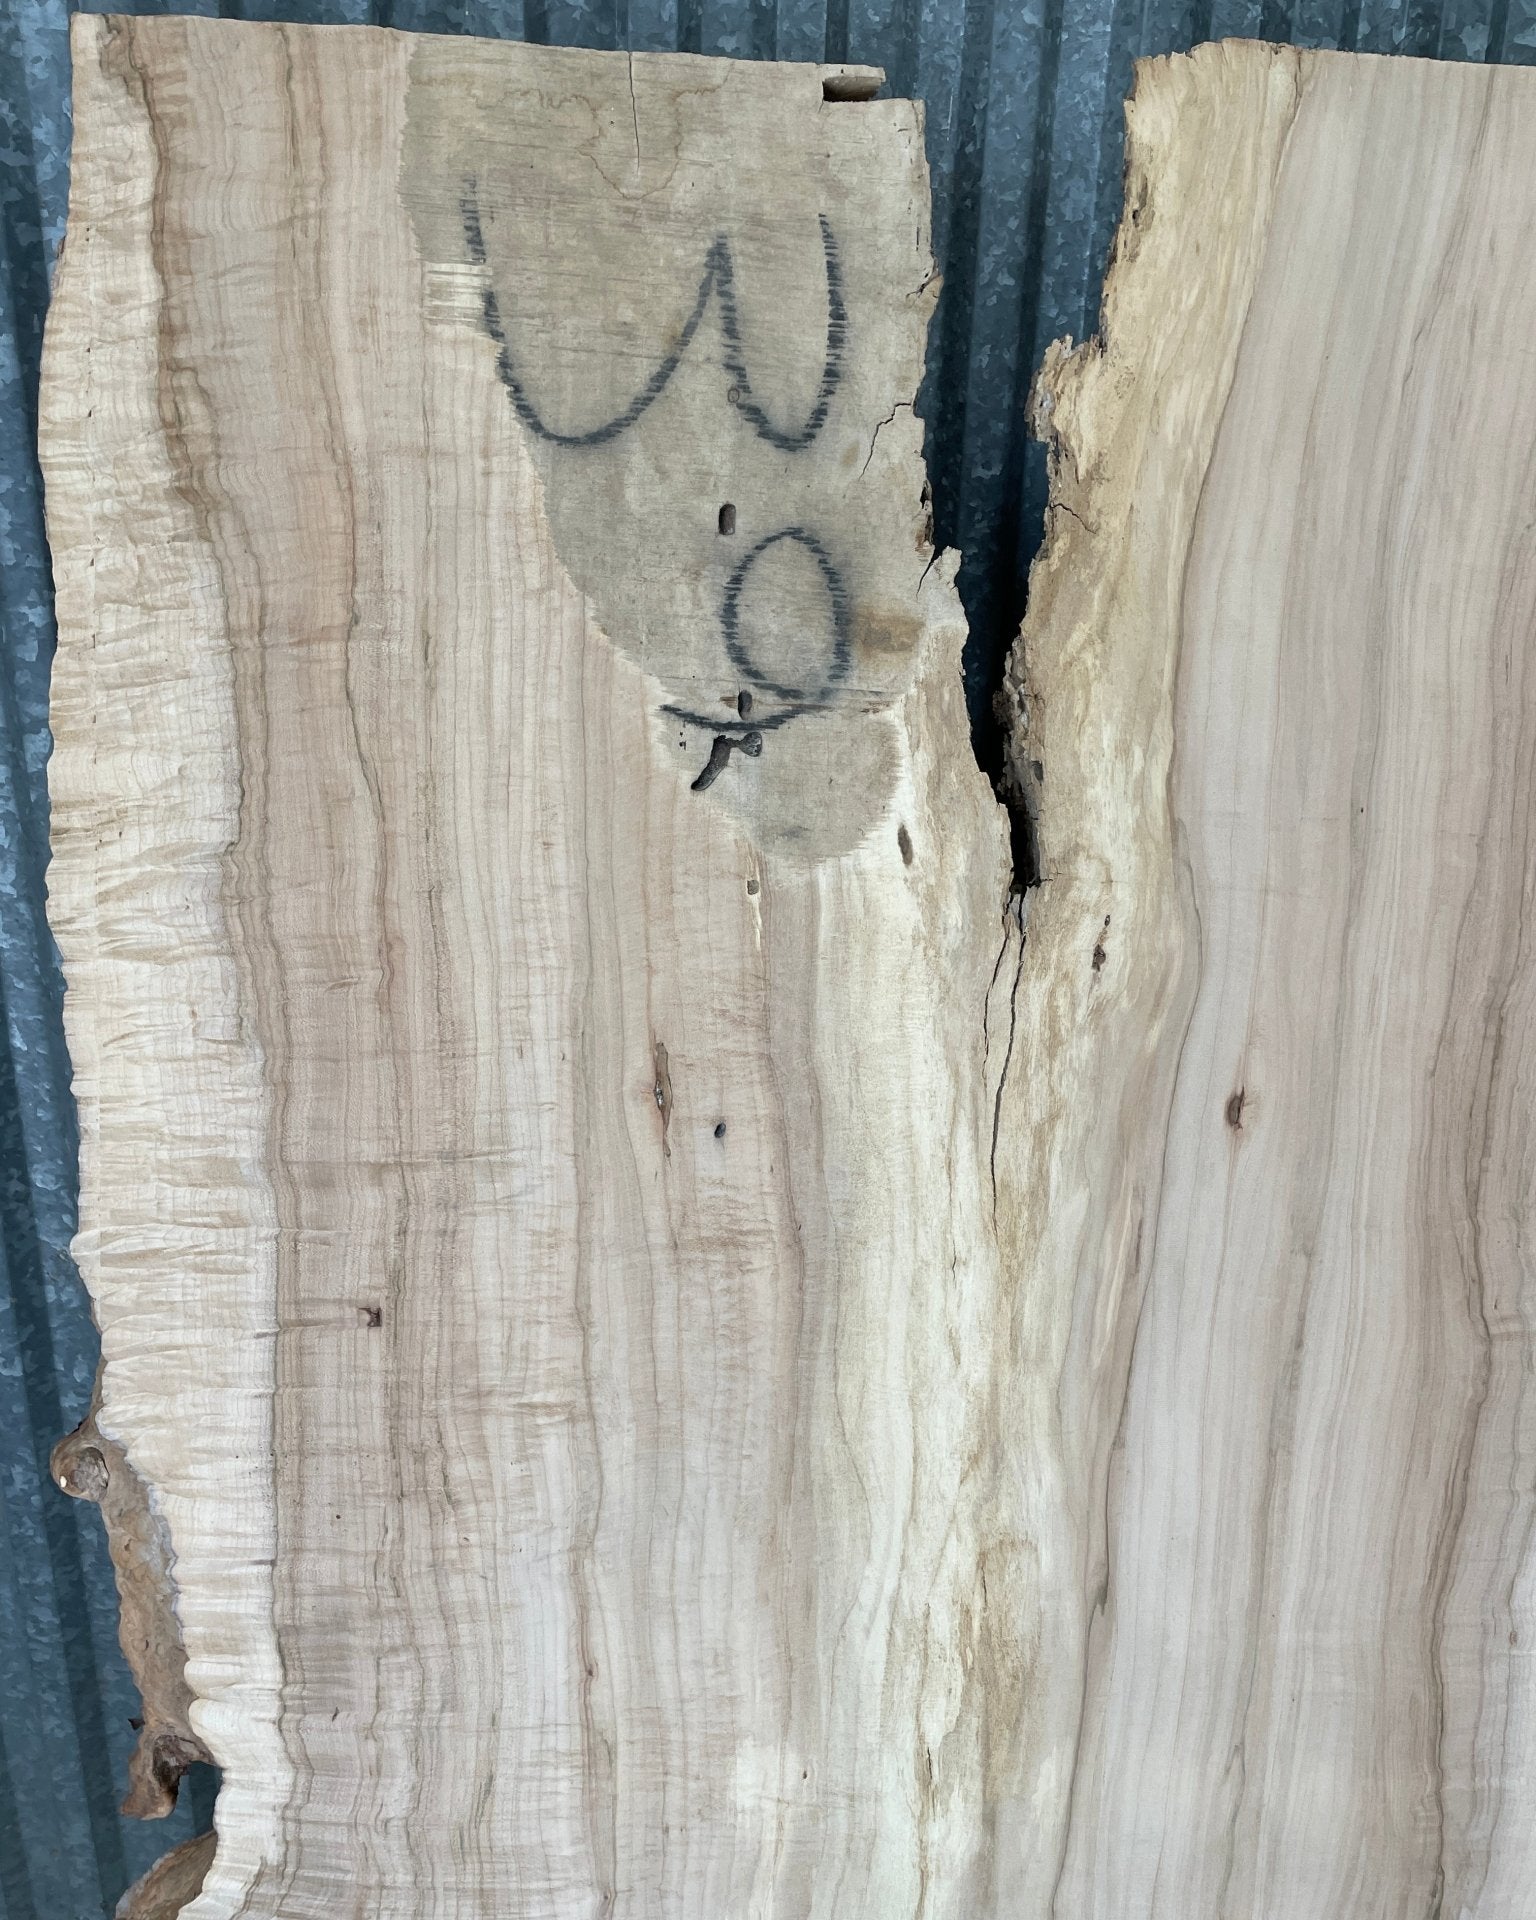 LiveEdge Norway Maple | Craft Wood & Shapes | Hamilton Lee Supply